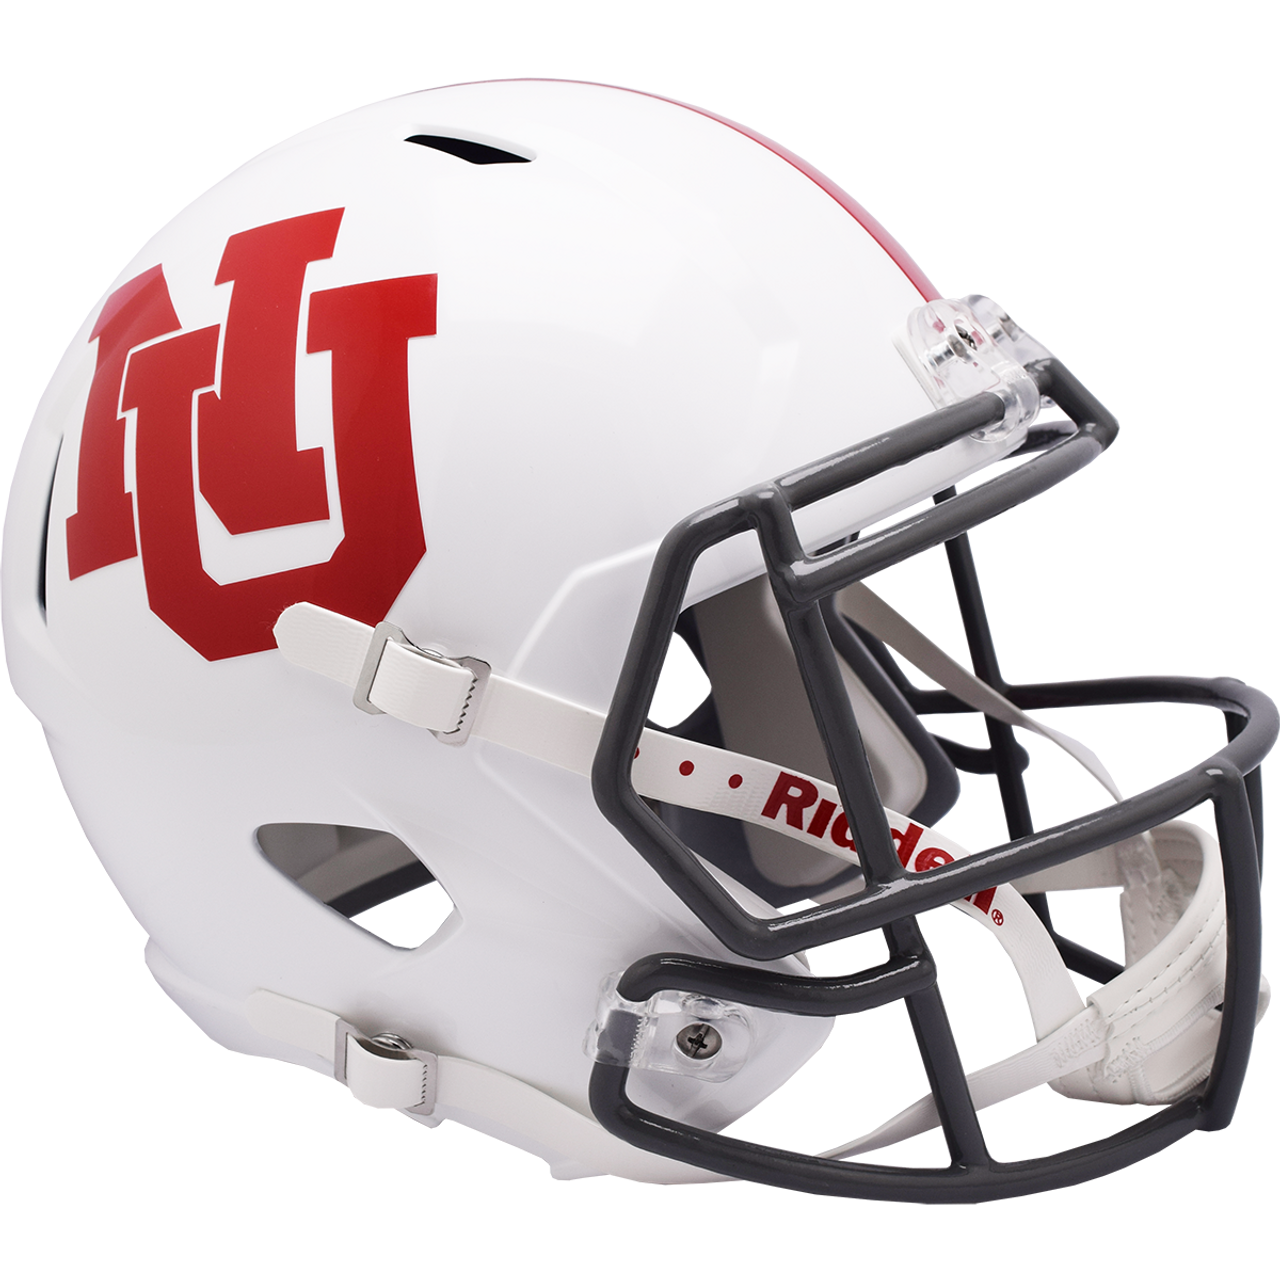 Nebraska Football: Husker helmets throughout the years